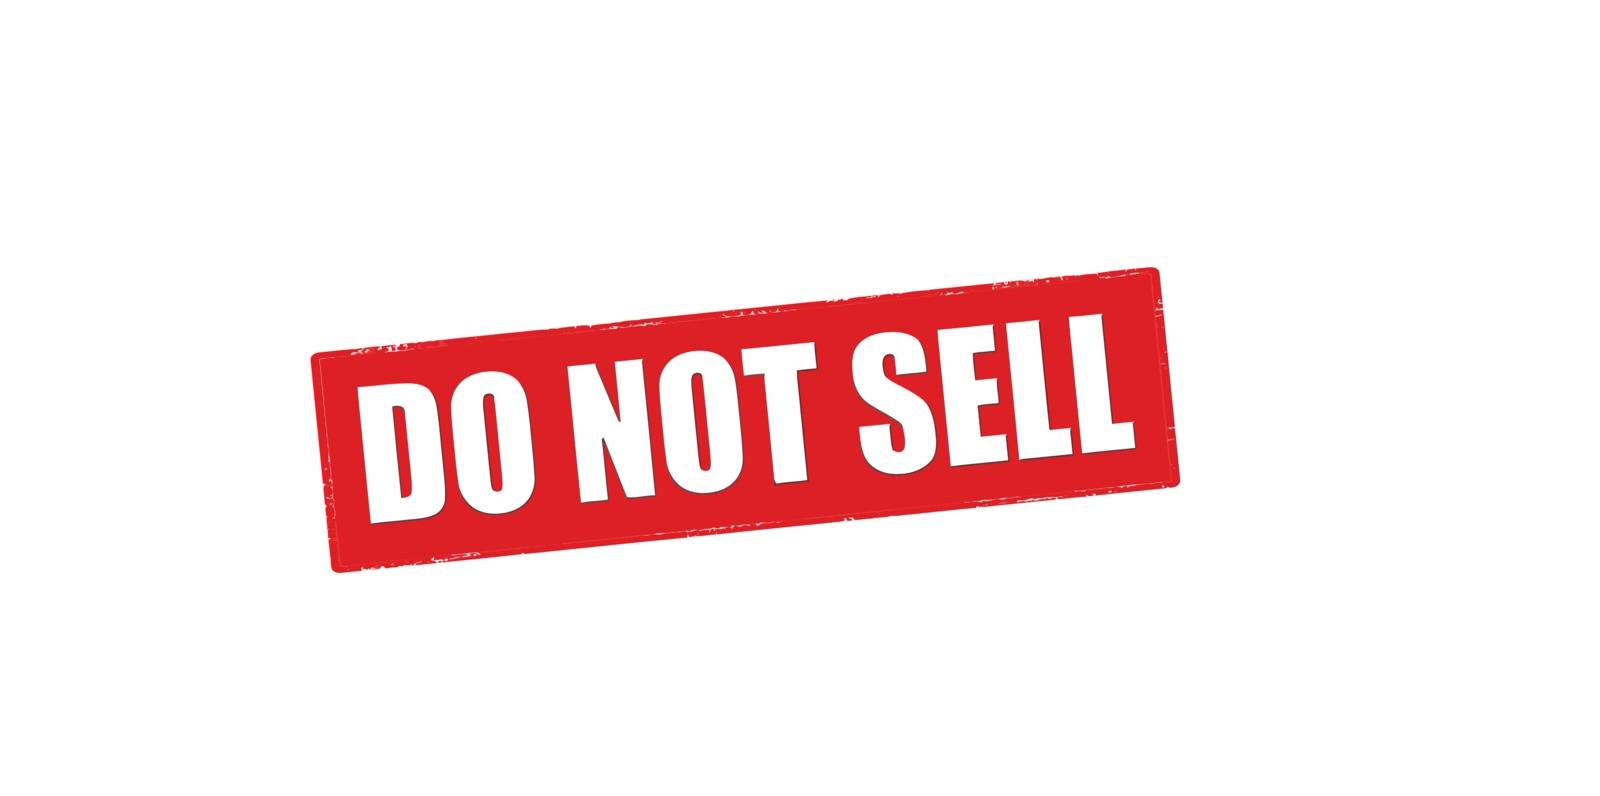 Do not sell by carmenbobo